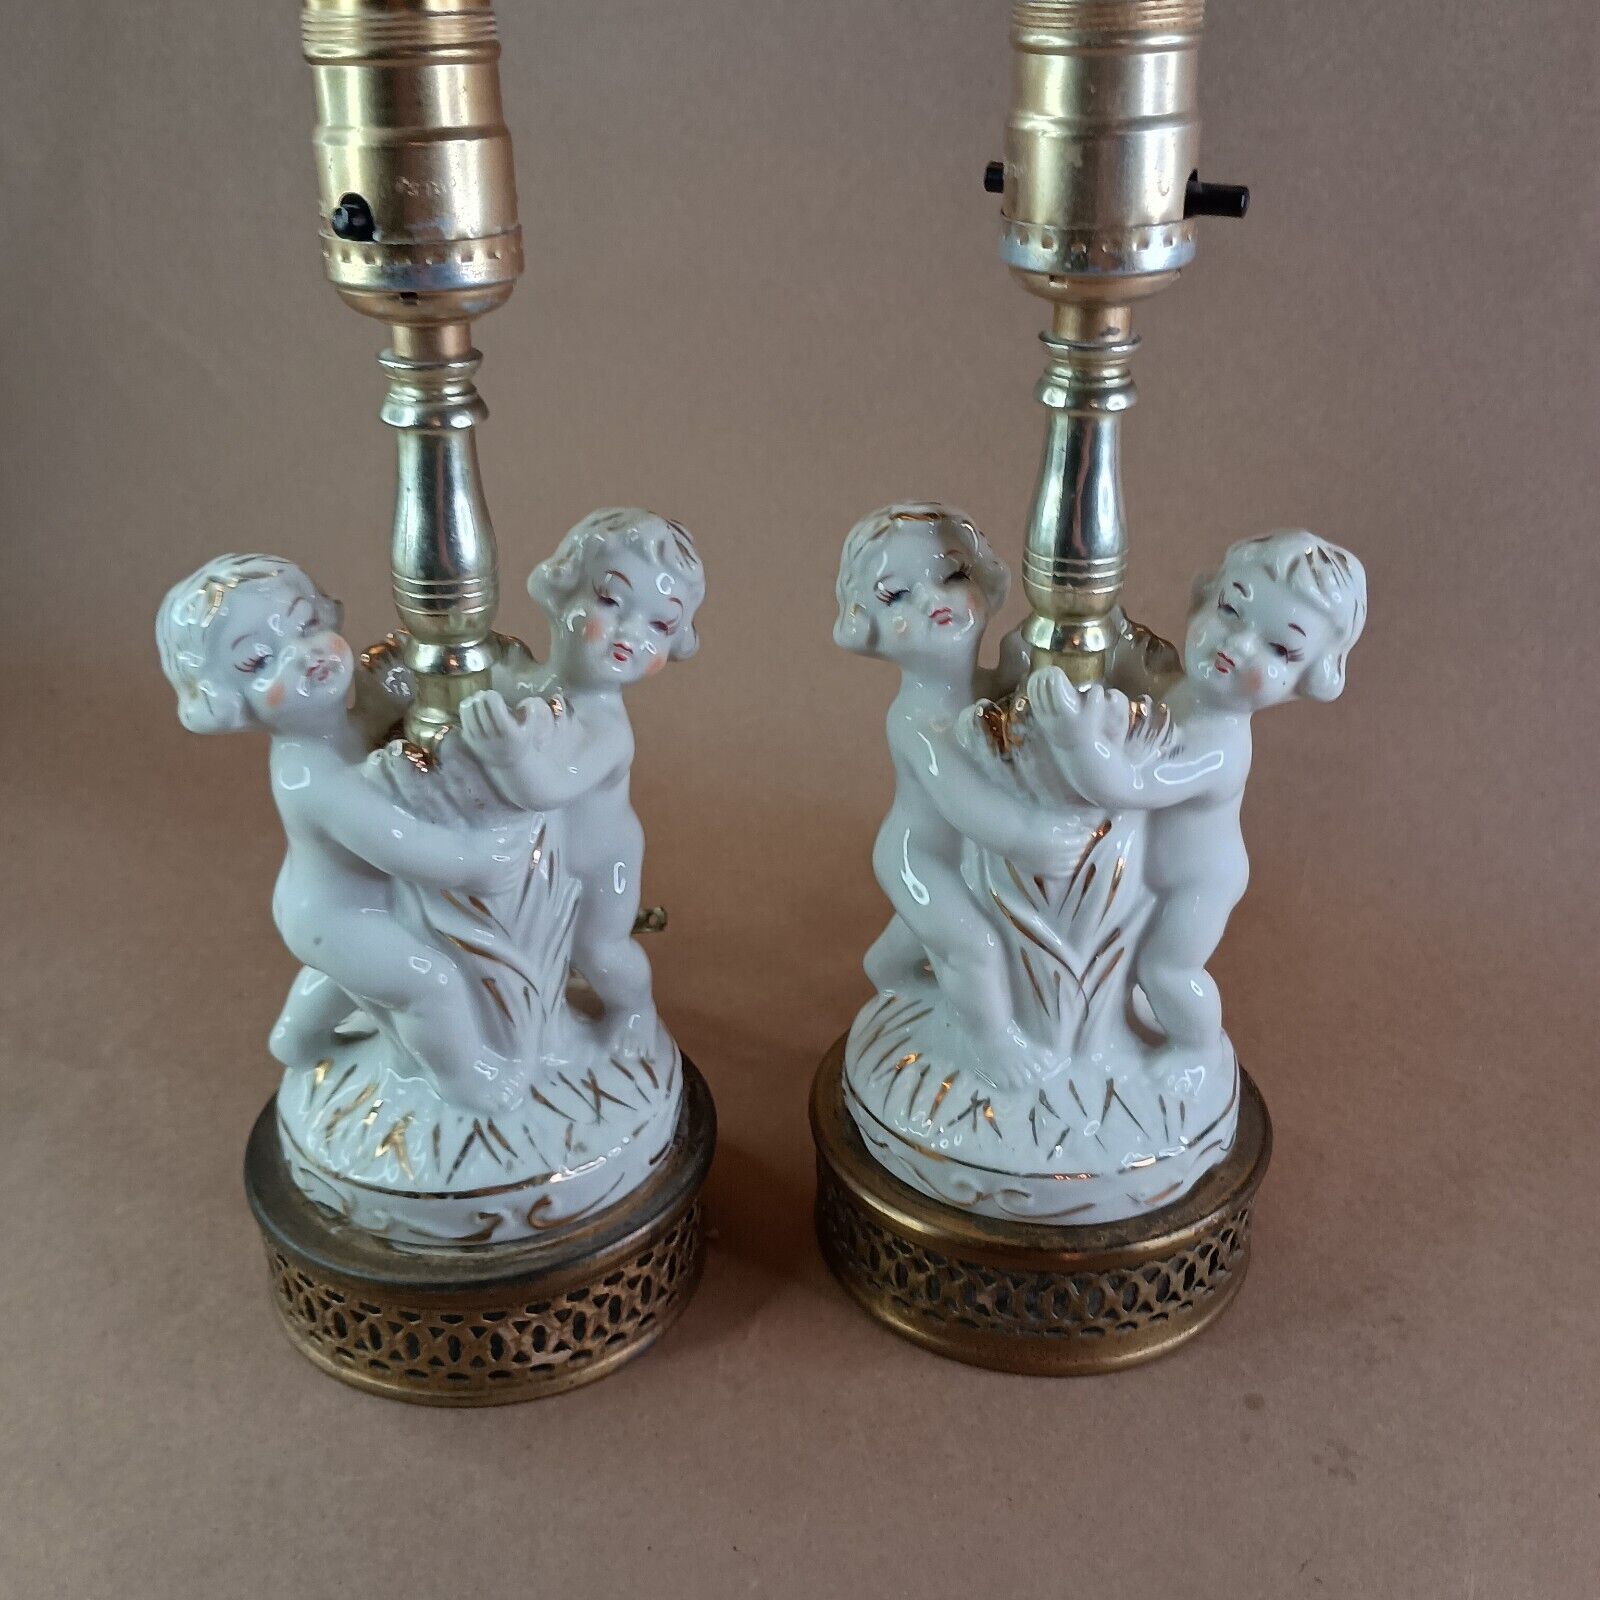 Pair of Vintage Lamps Ceramic Figurines On Metal Bases, Tested & Working